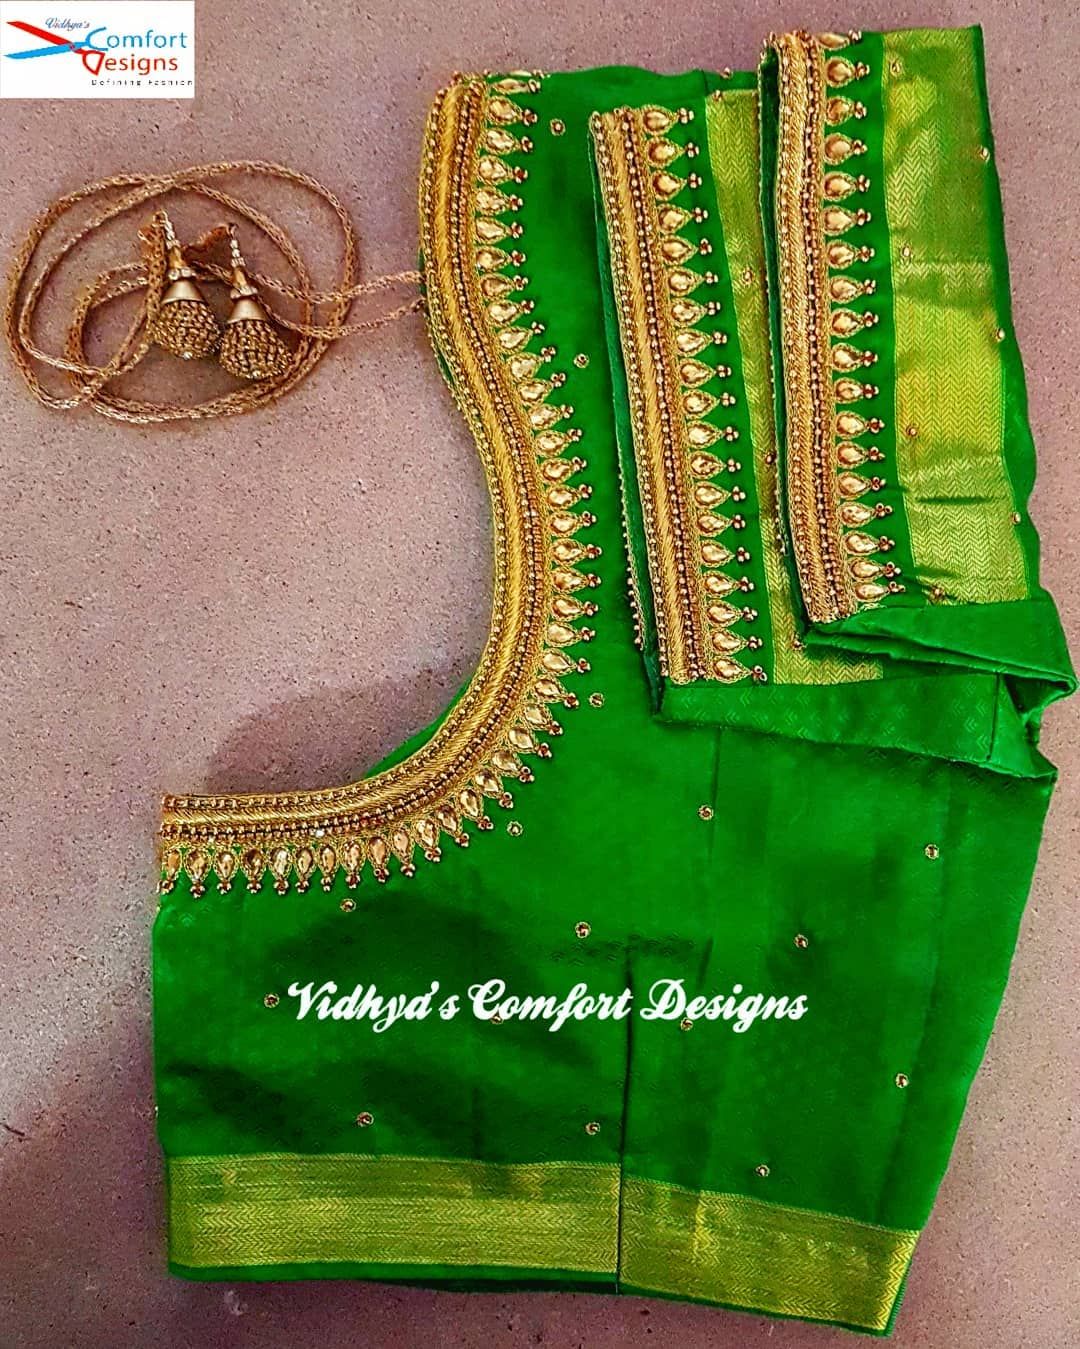 Vidhyas Comfort Designs On Instagram “Bridal Blouse Designs Follow @Vidhyas Comfort Designs